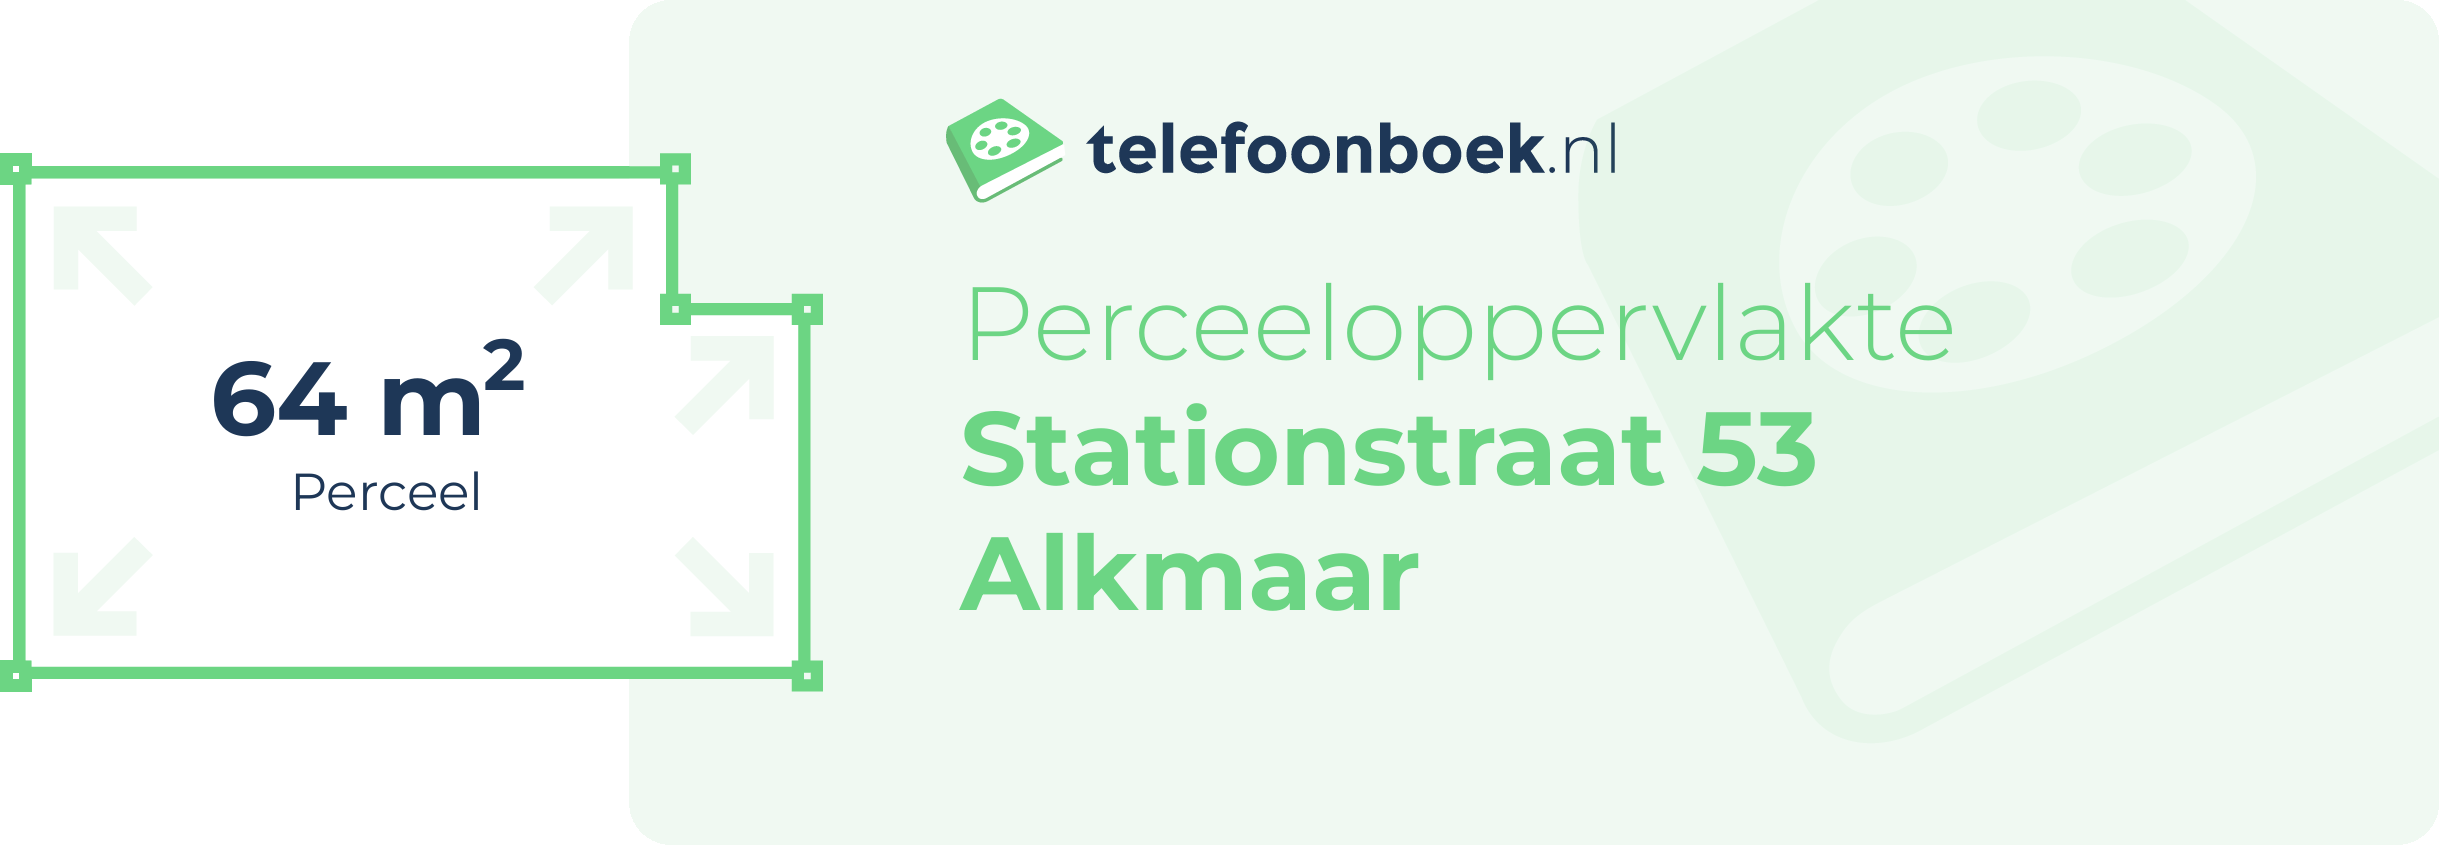 Perceeloppervlakte Stationstraat 53 Alkmaar